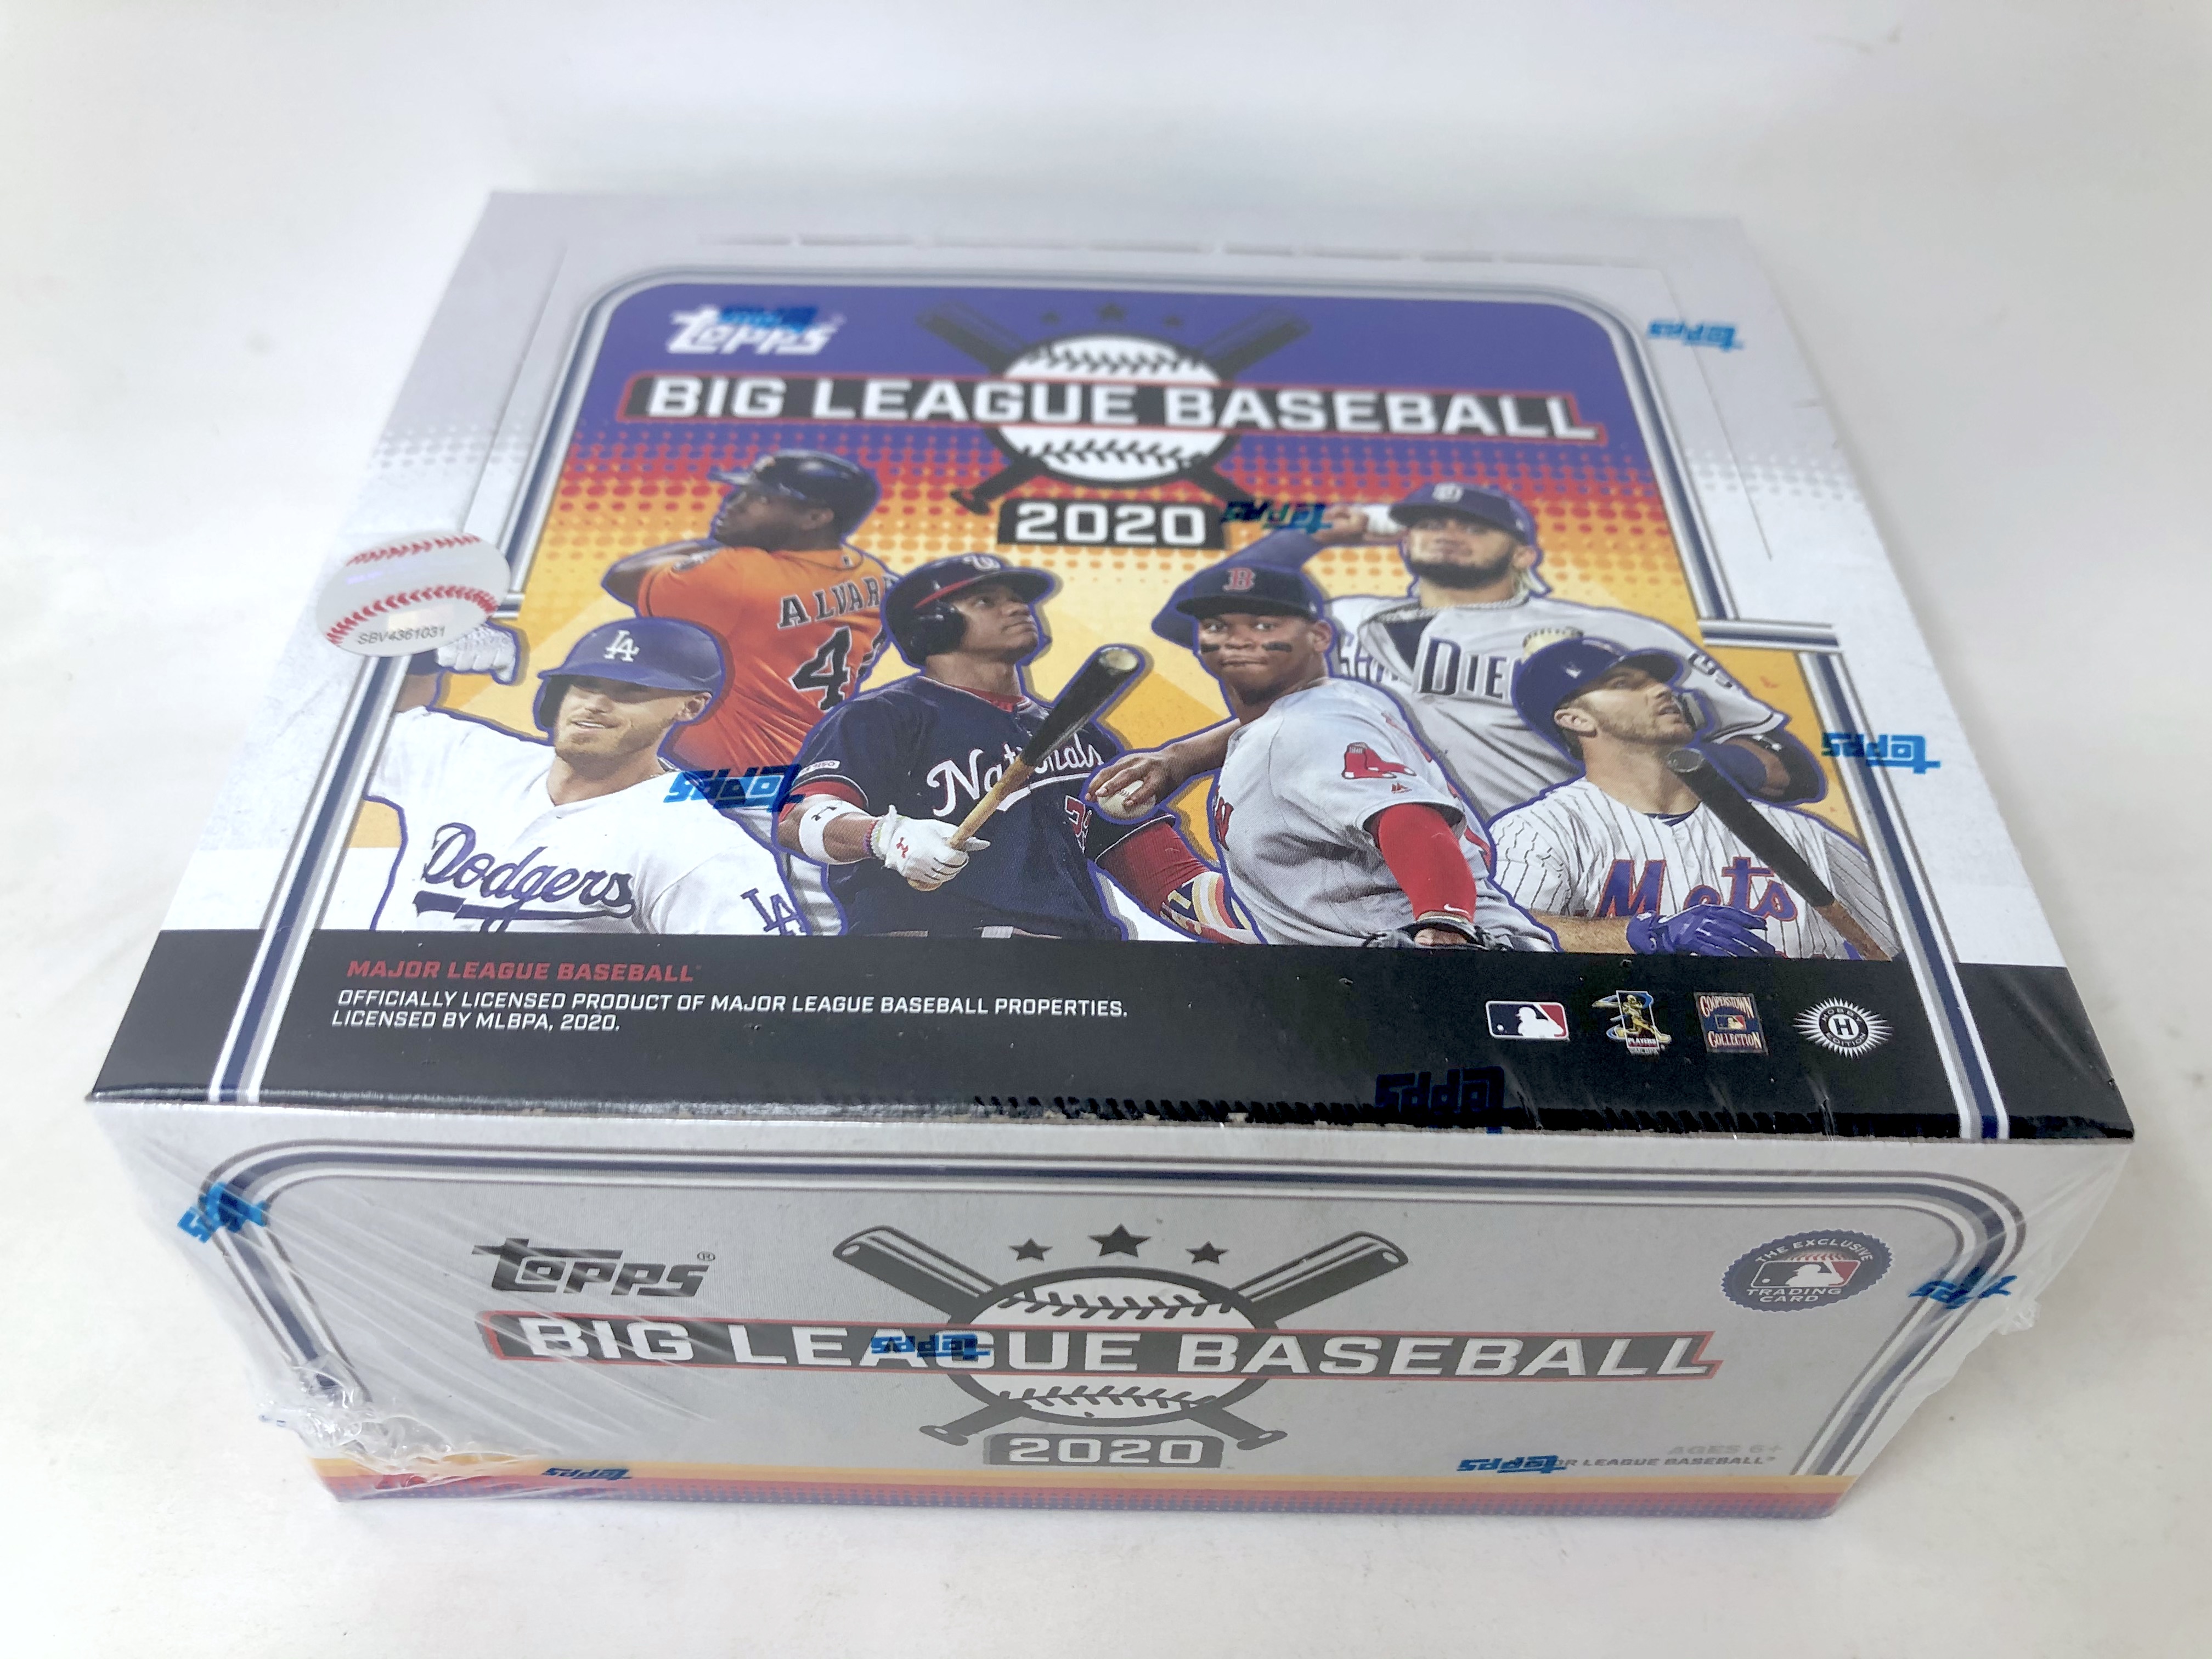 2020 Topps Big League Baseball Display Box (18 Packs/10 Cards) - image 1 of 2